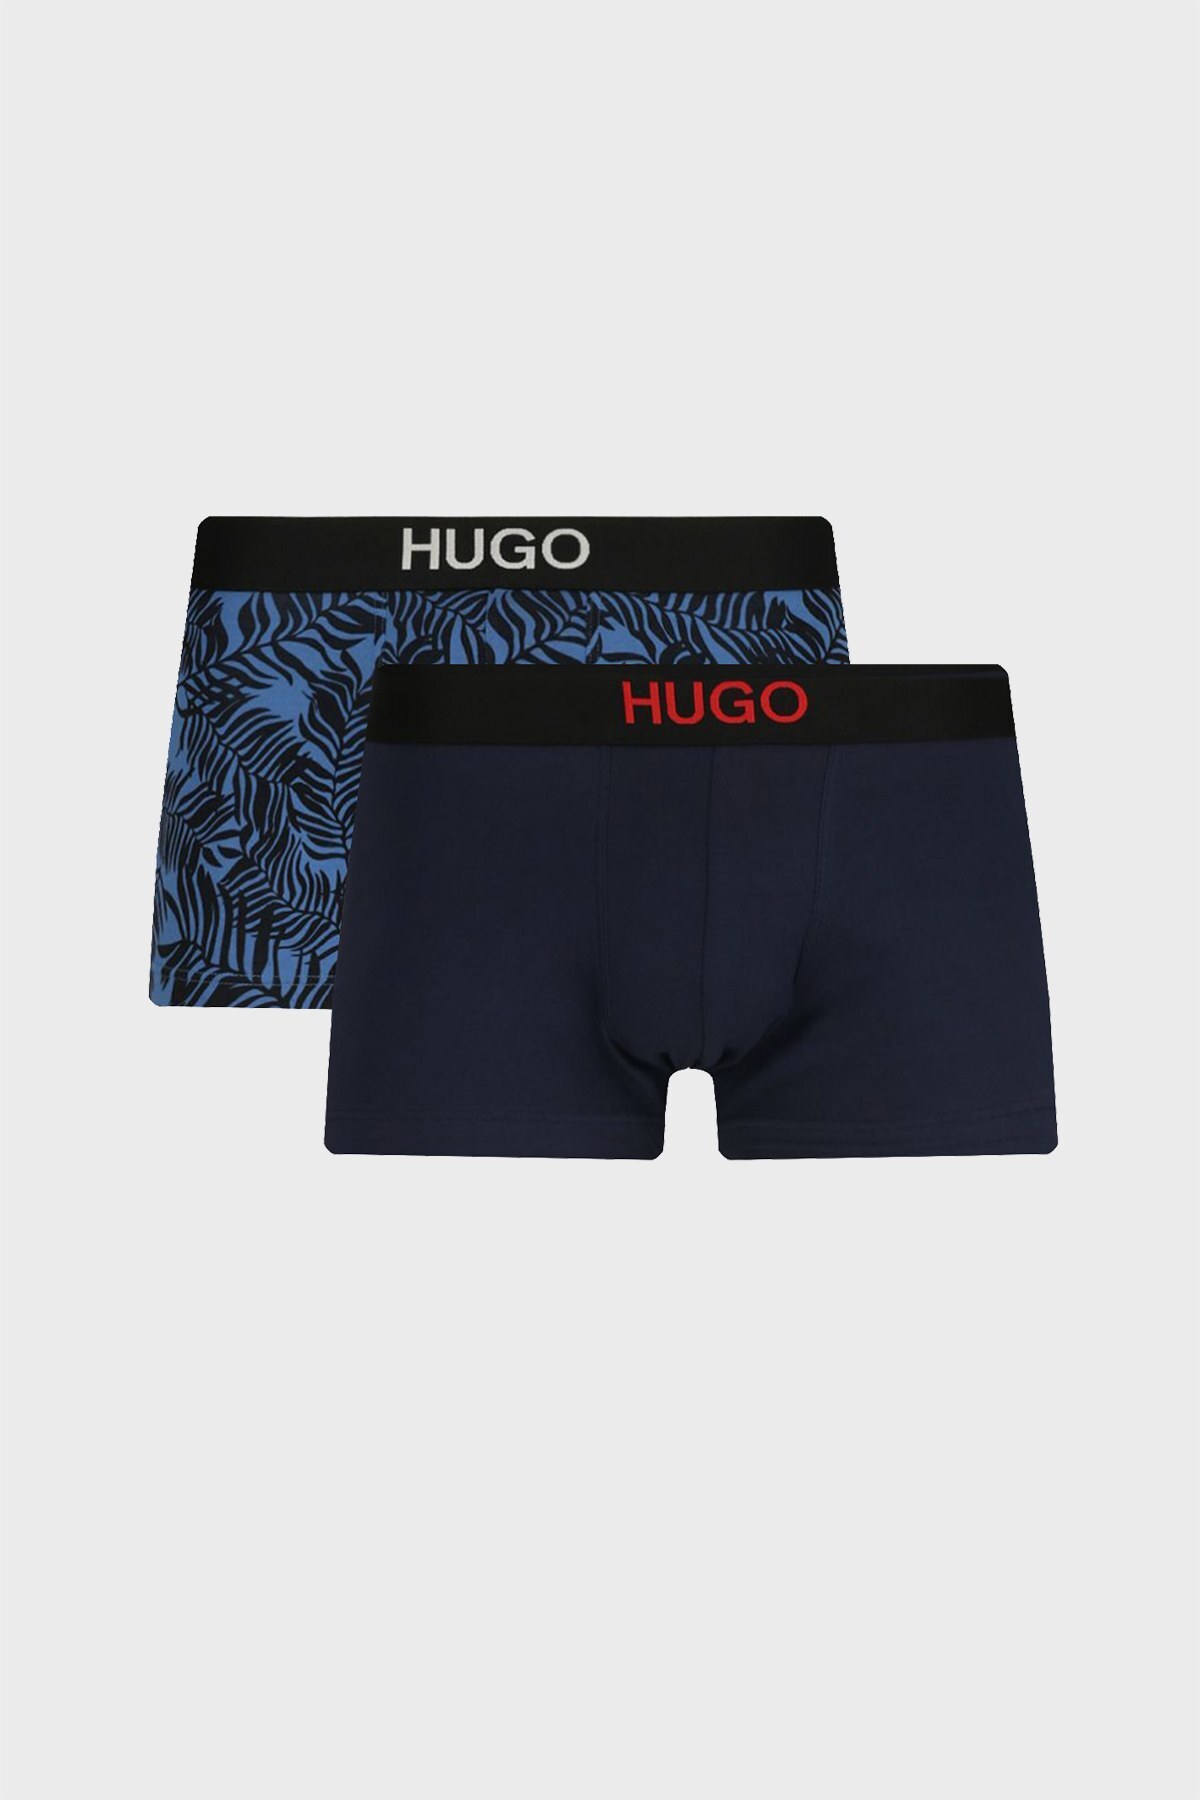 Hugo Boss Pamuklu 2 Pack Erkek Boxer 50454316 460 LACİVERT-SİYAH